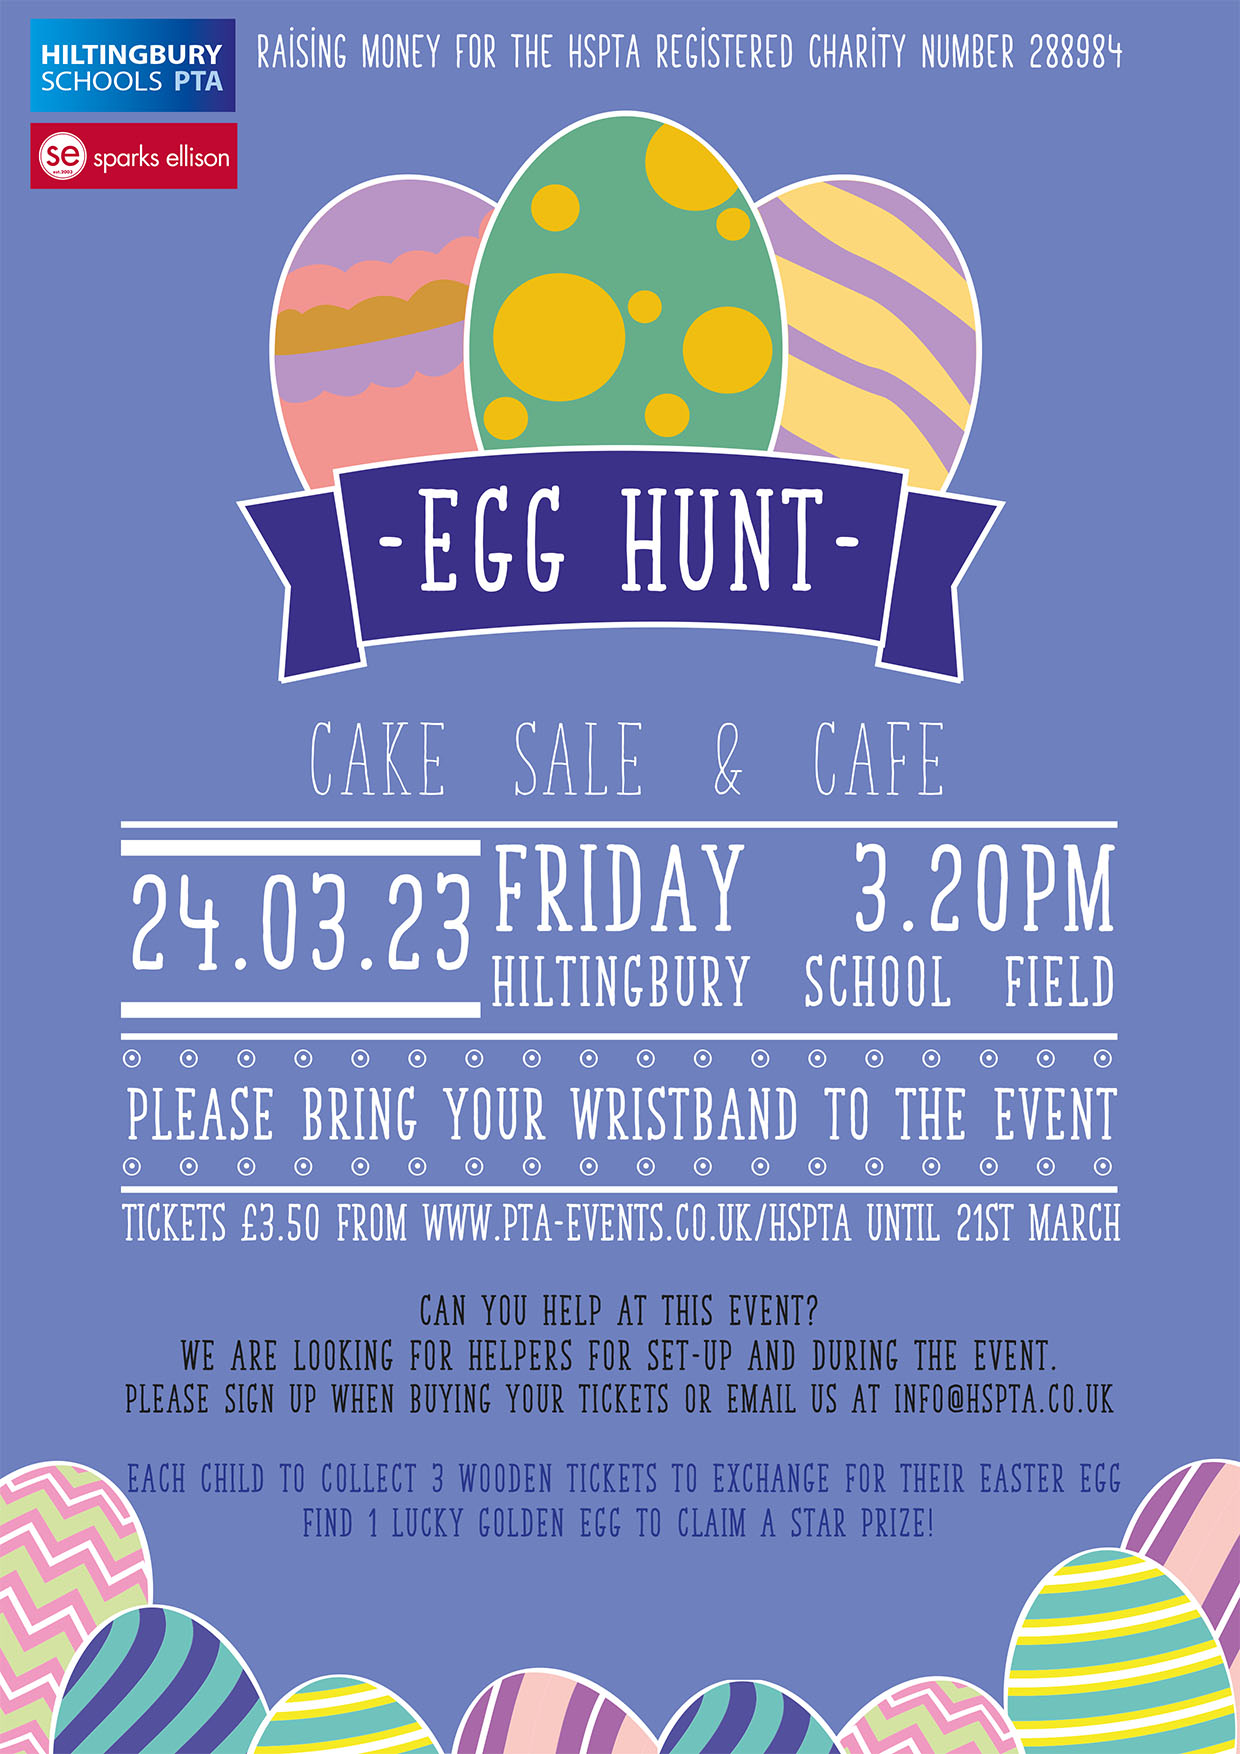 Hiltingbury School Easter Egg Hunt